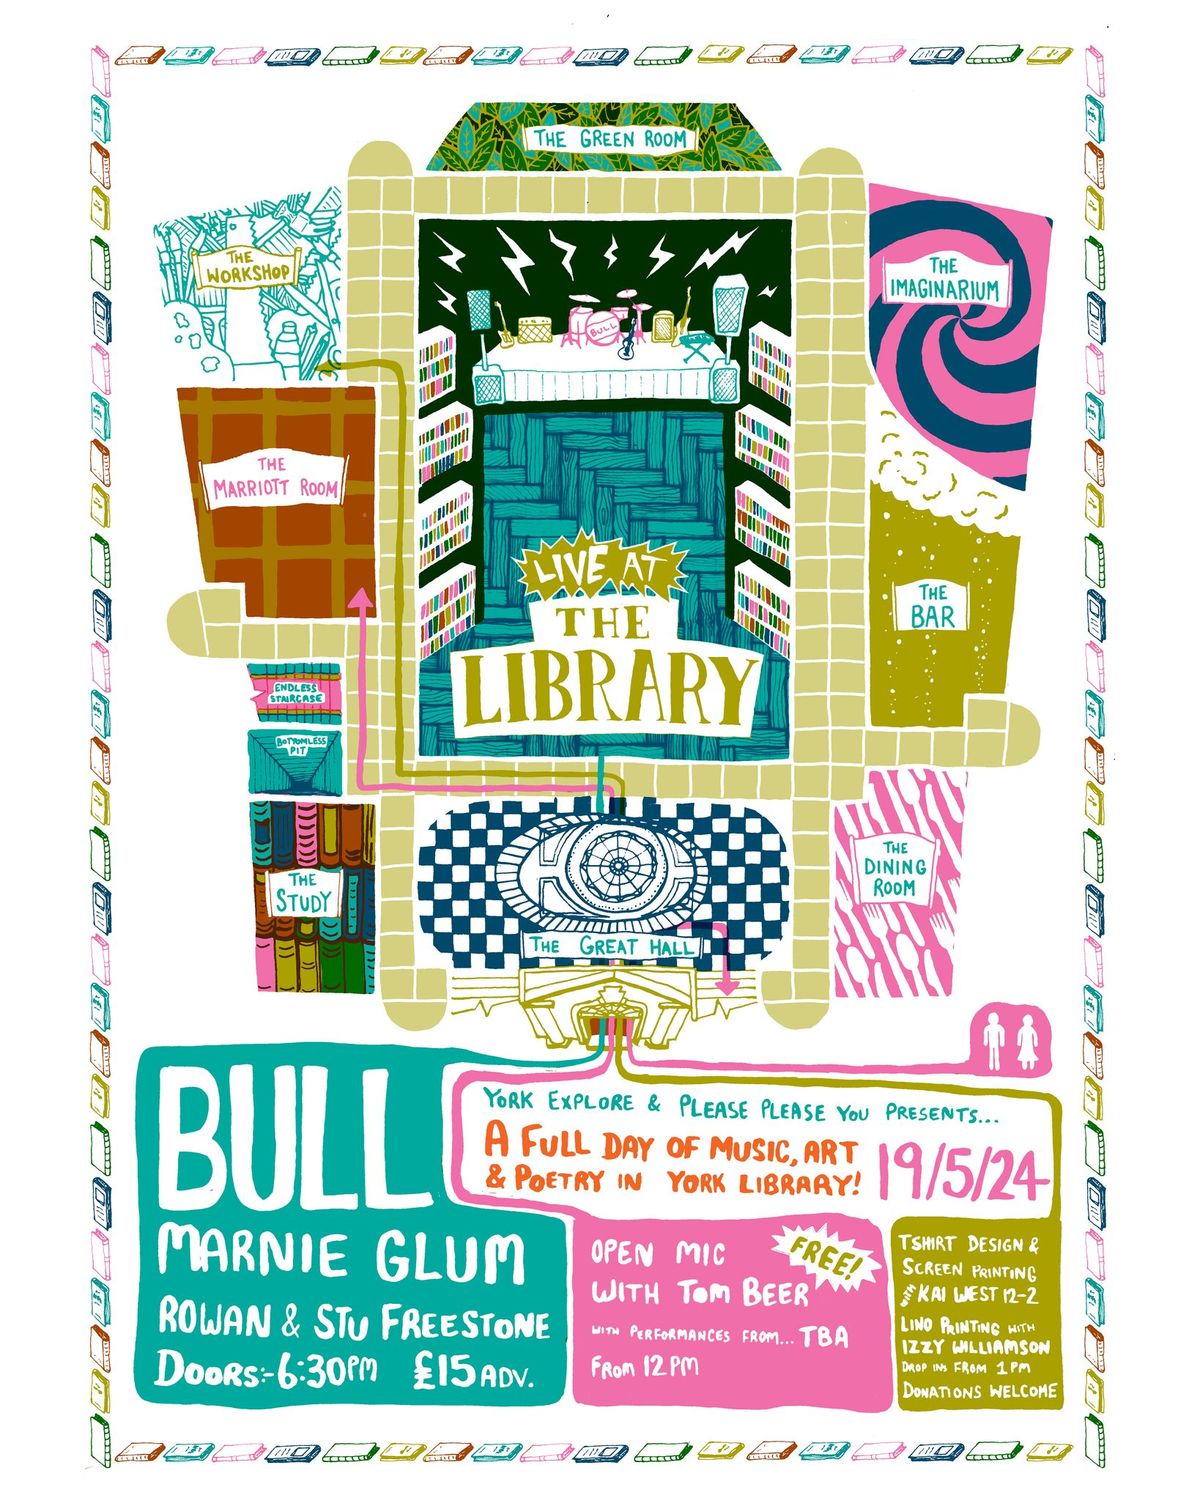 Live At The Library - Bull, Marnie Glum & Rowan